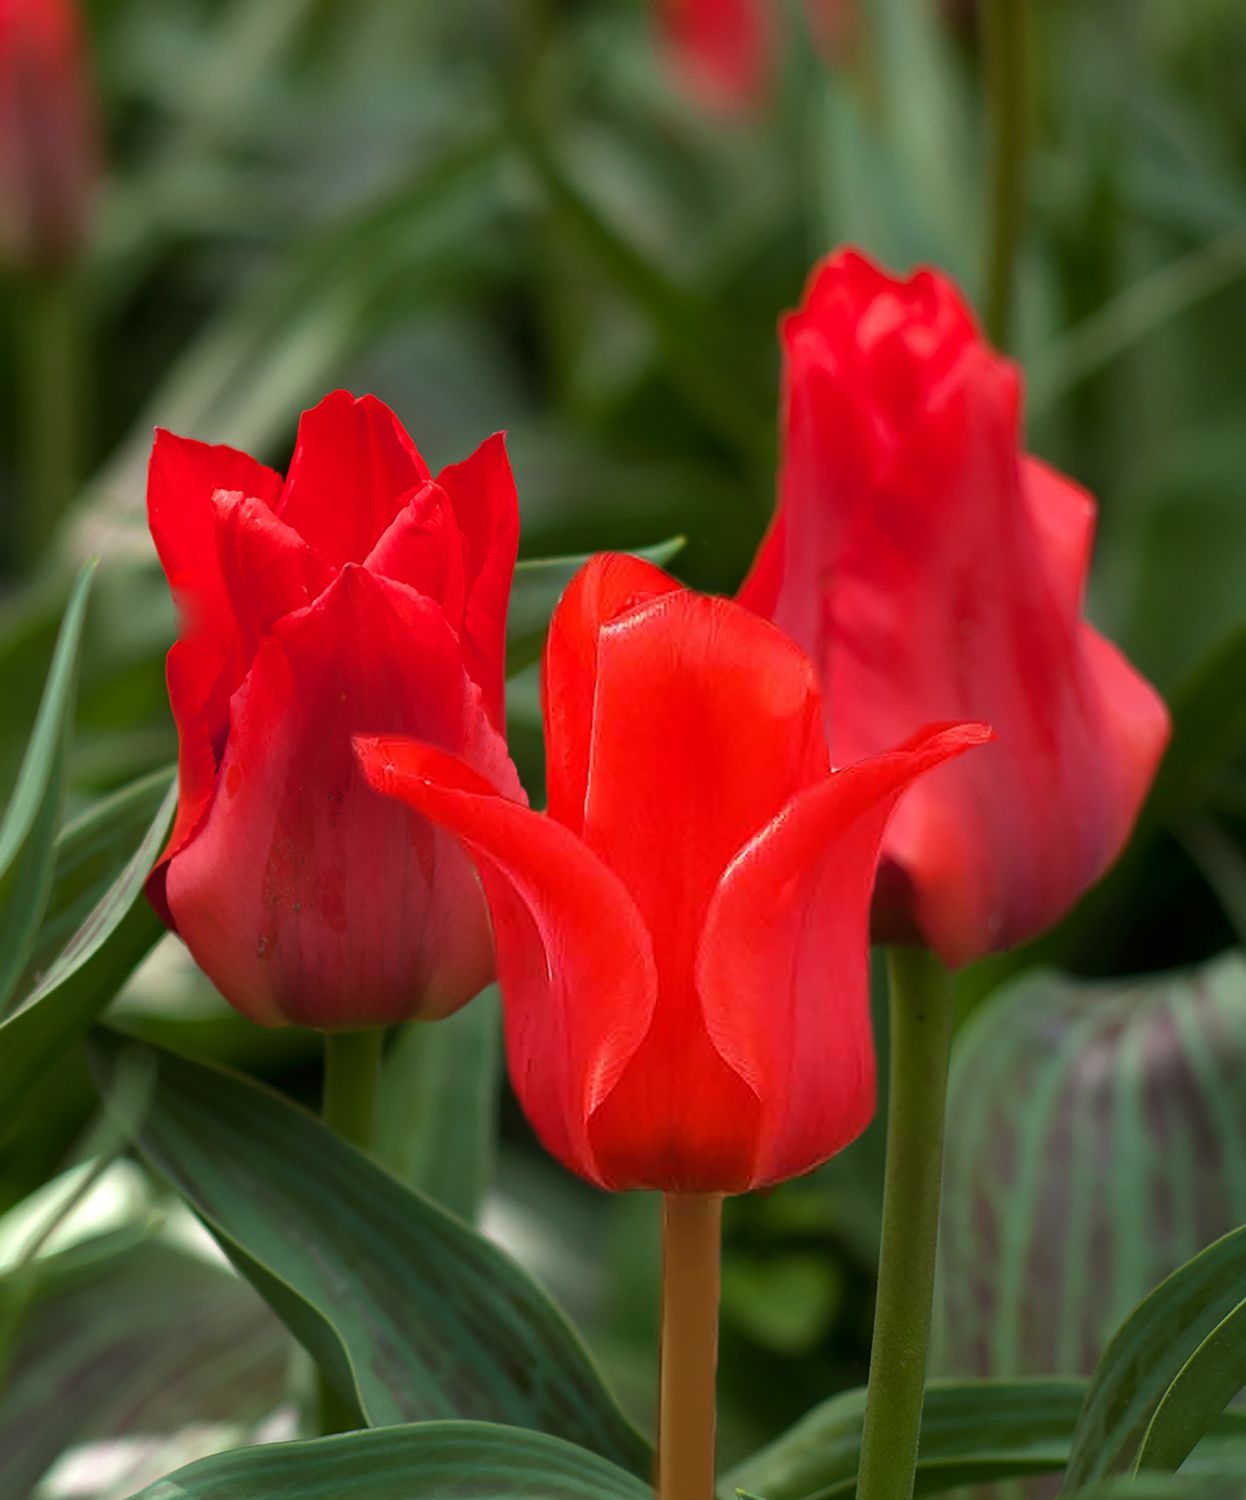 Tulipa greigii 'Red Riding Hood' (Greigii-Tulpe "Rotkäppchen")